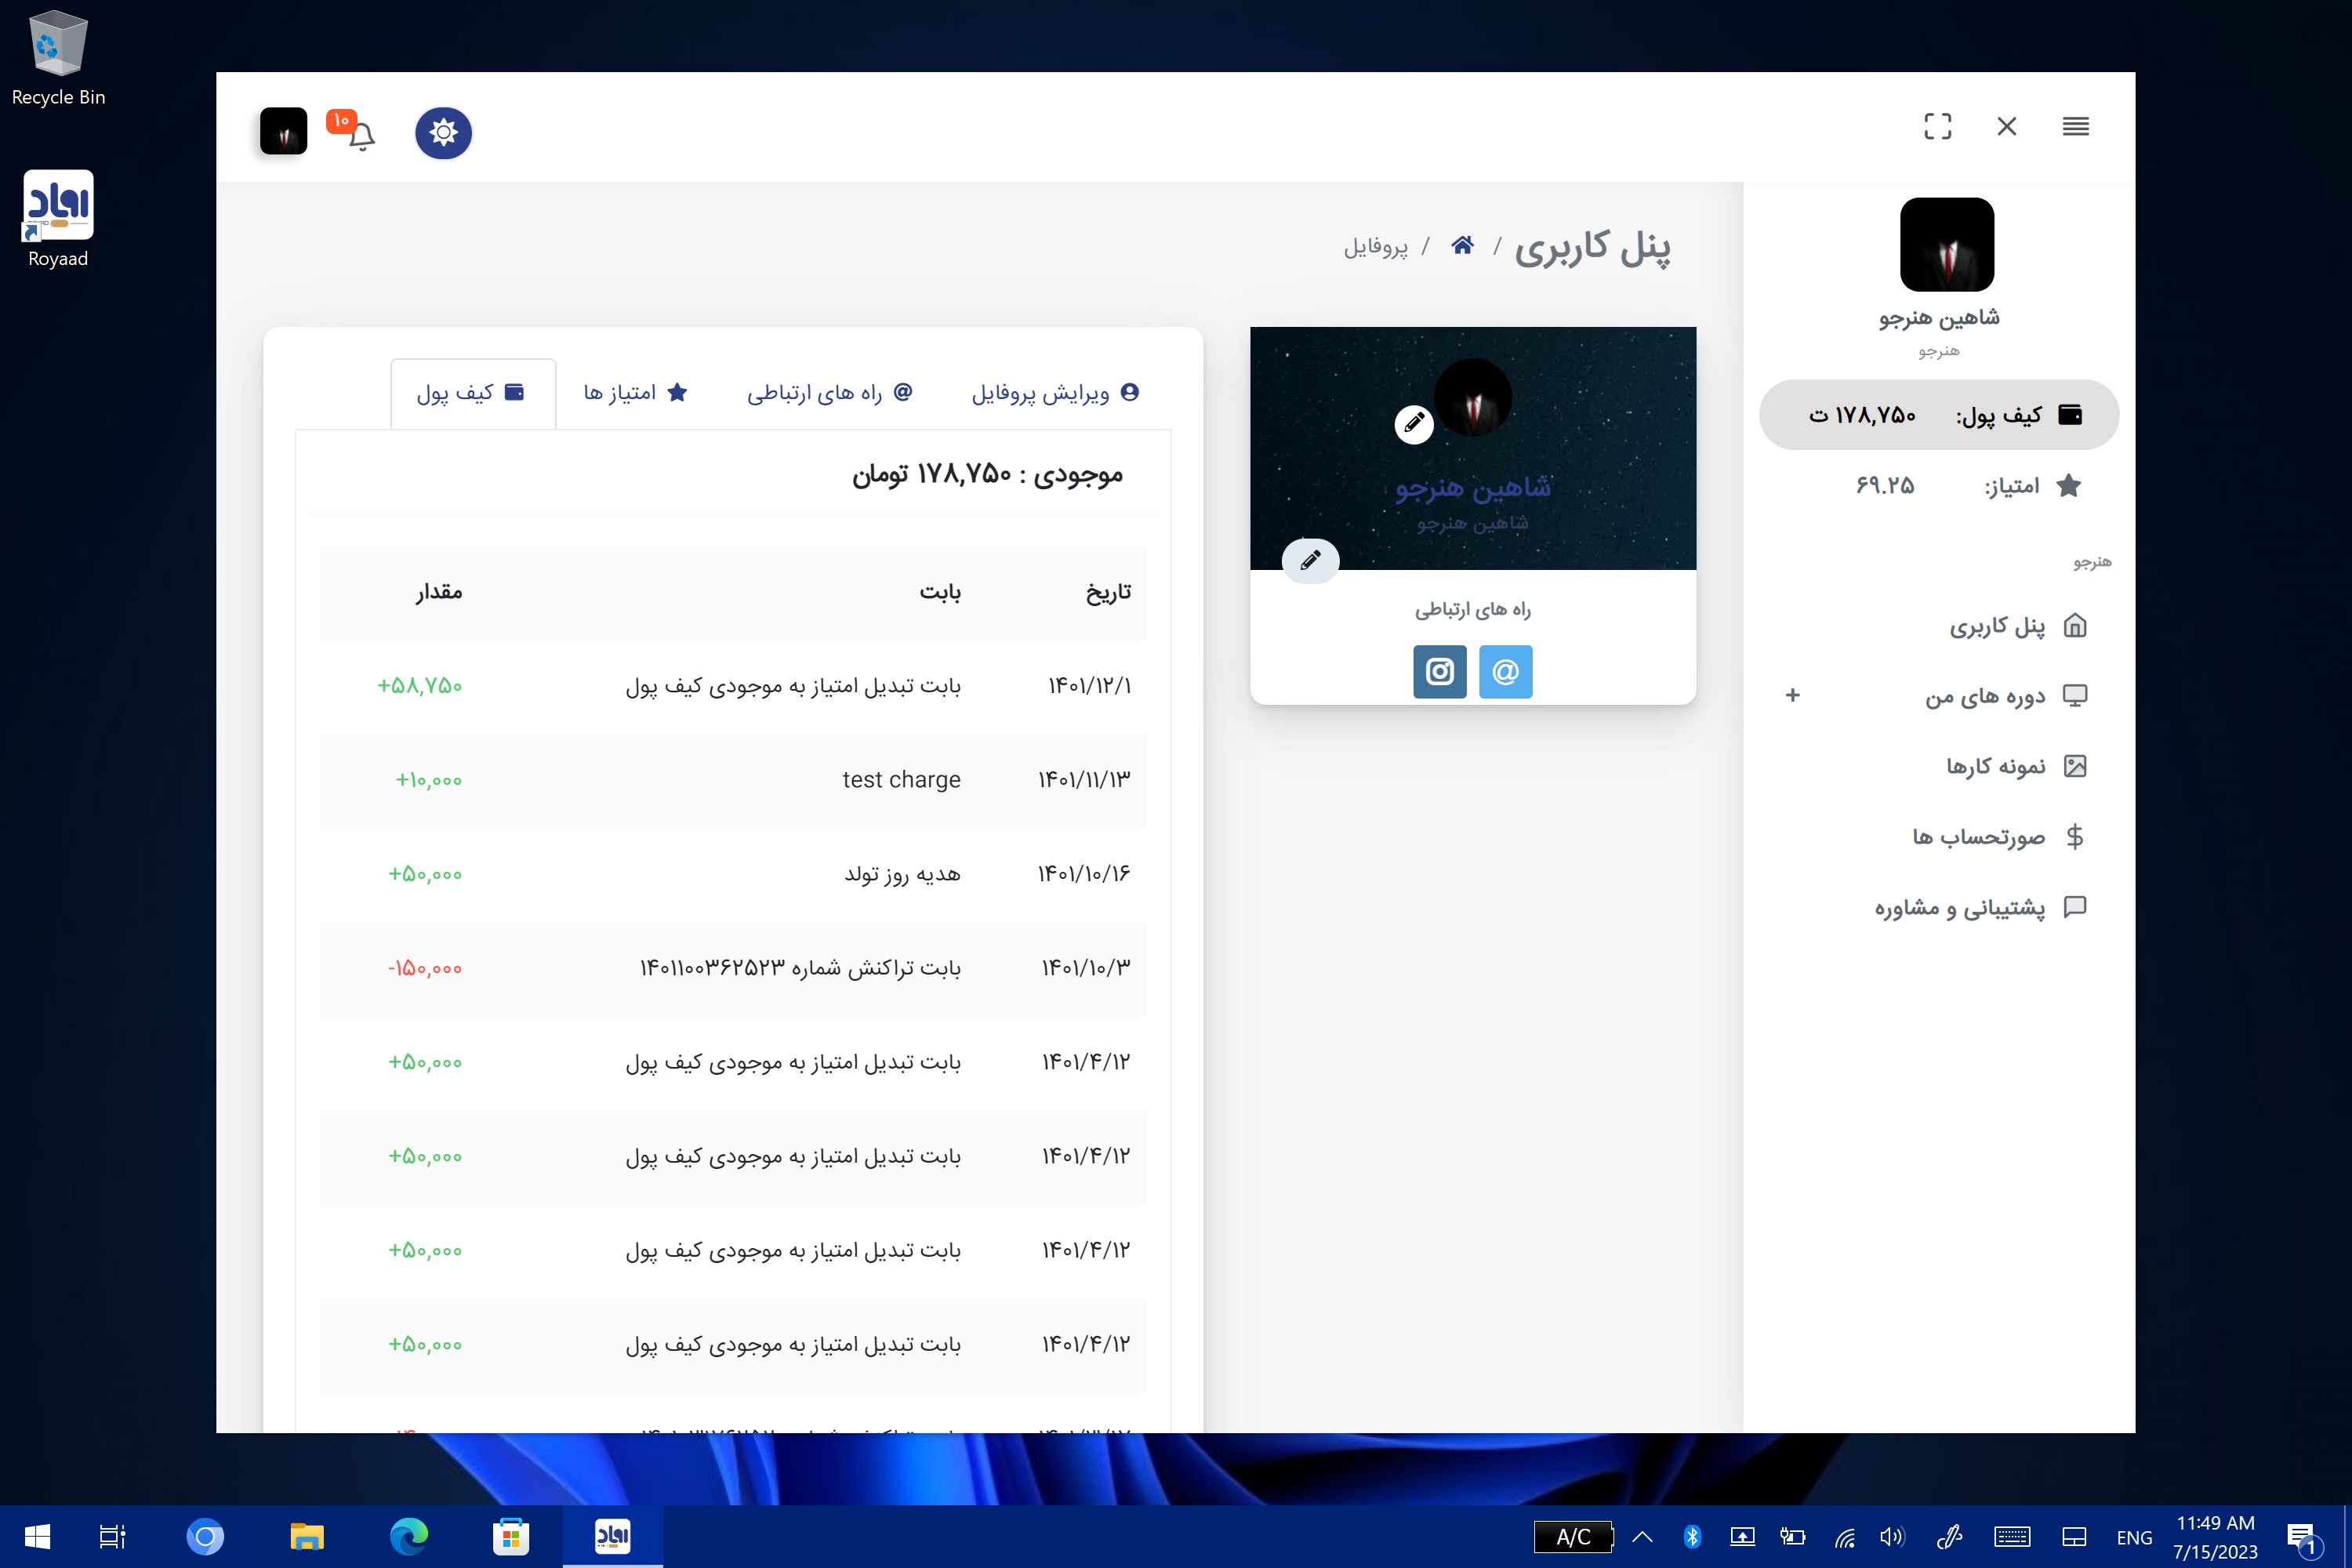 Shahinsoft.ir Royaad desktop application Wallet